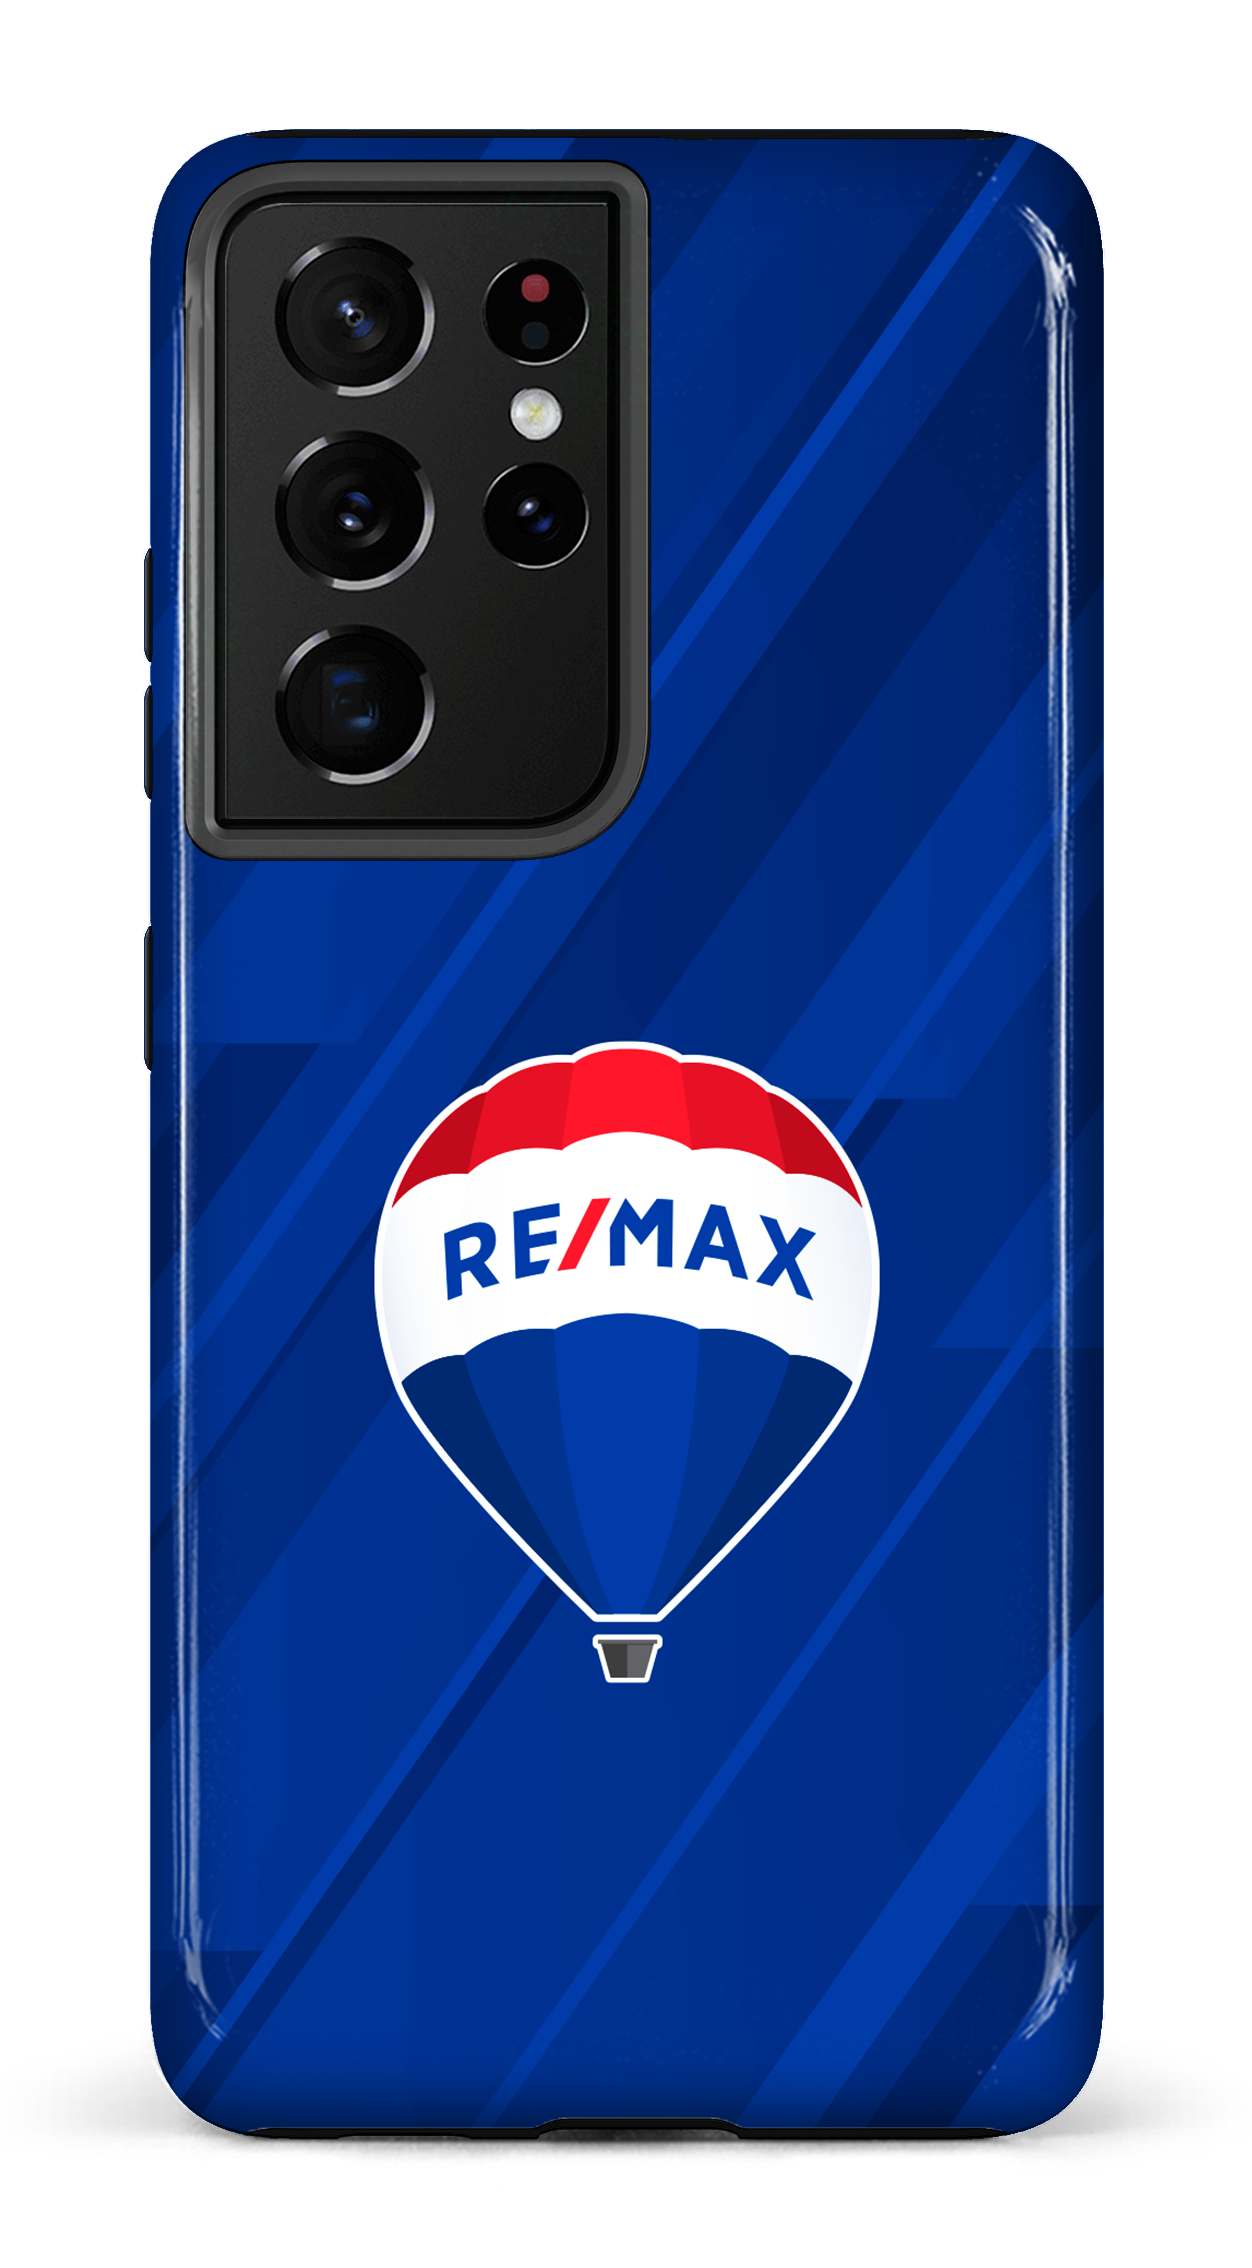 Remax Bleu - Galaxy S21 Ultra